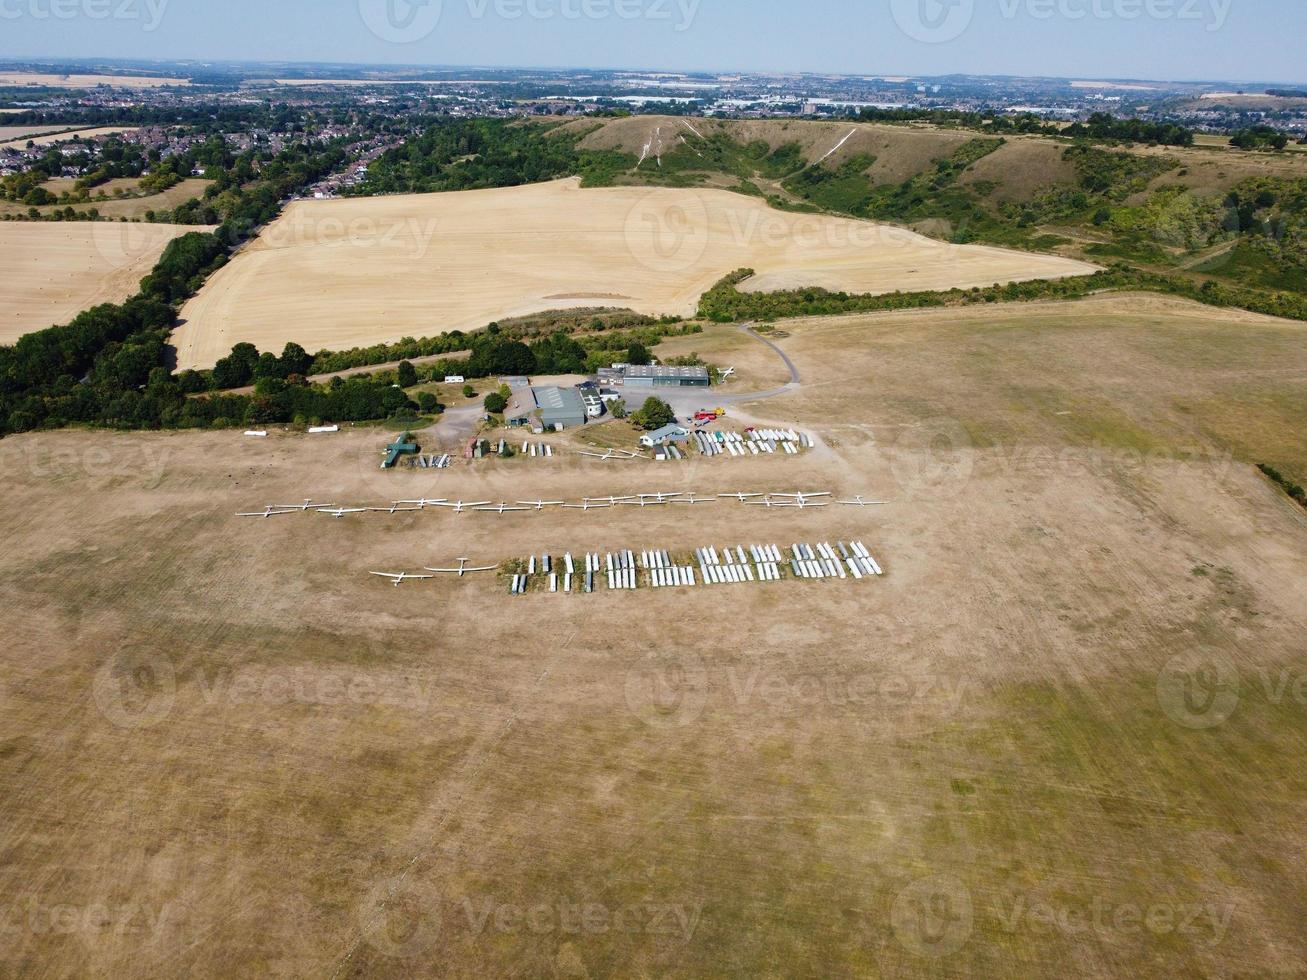 zweefvliegtuig luchthaven in de veld, hoog hoek beeldmateriaal van drone's camera. mooi antenne landschap visie van dunstabiel downs Engeland Super goed Brittannië foto